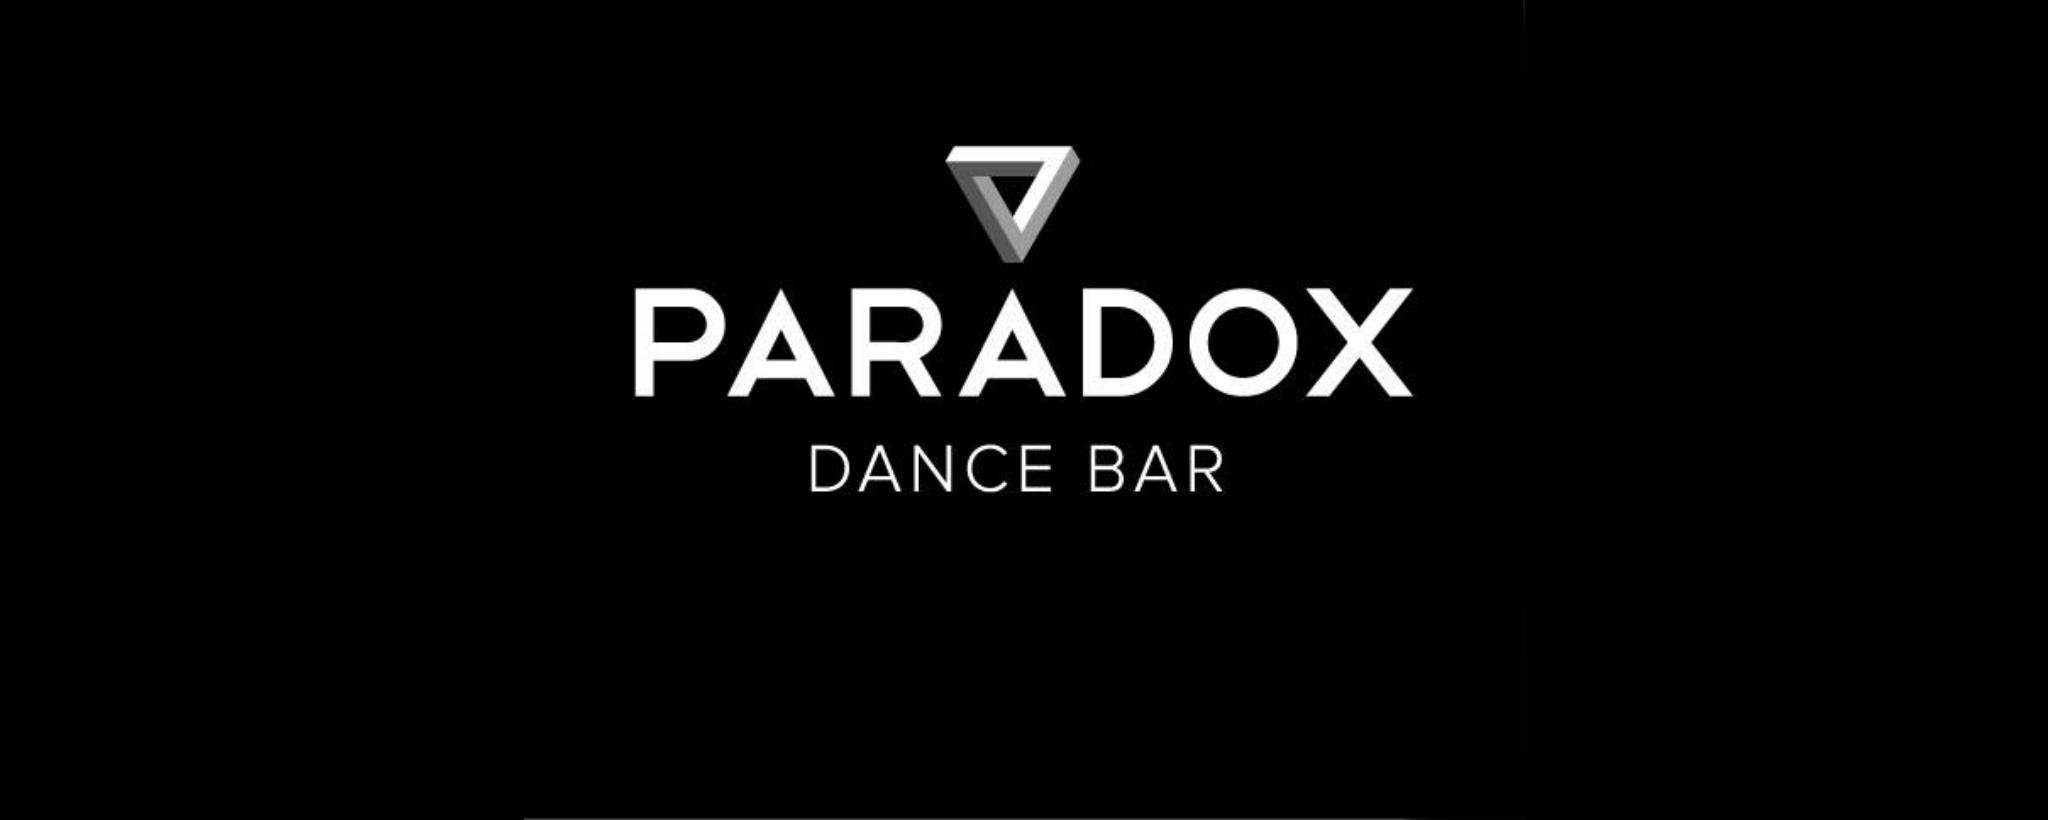 Dance bar Paradox